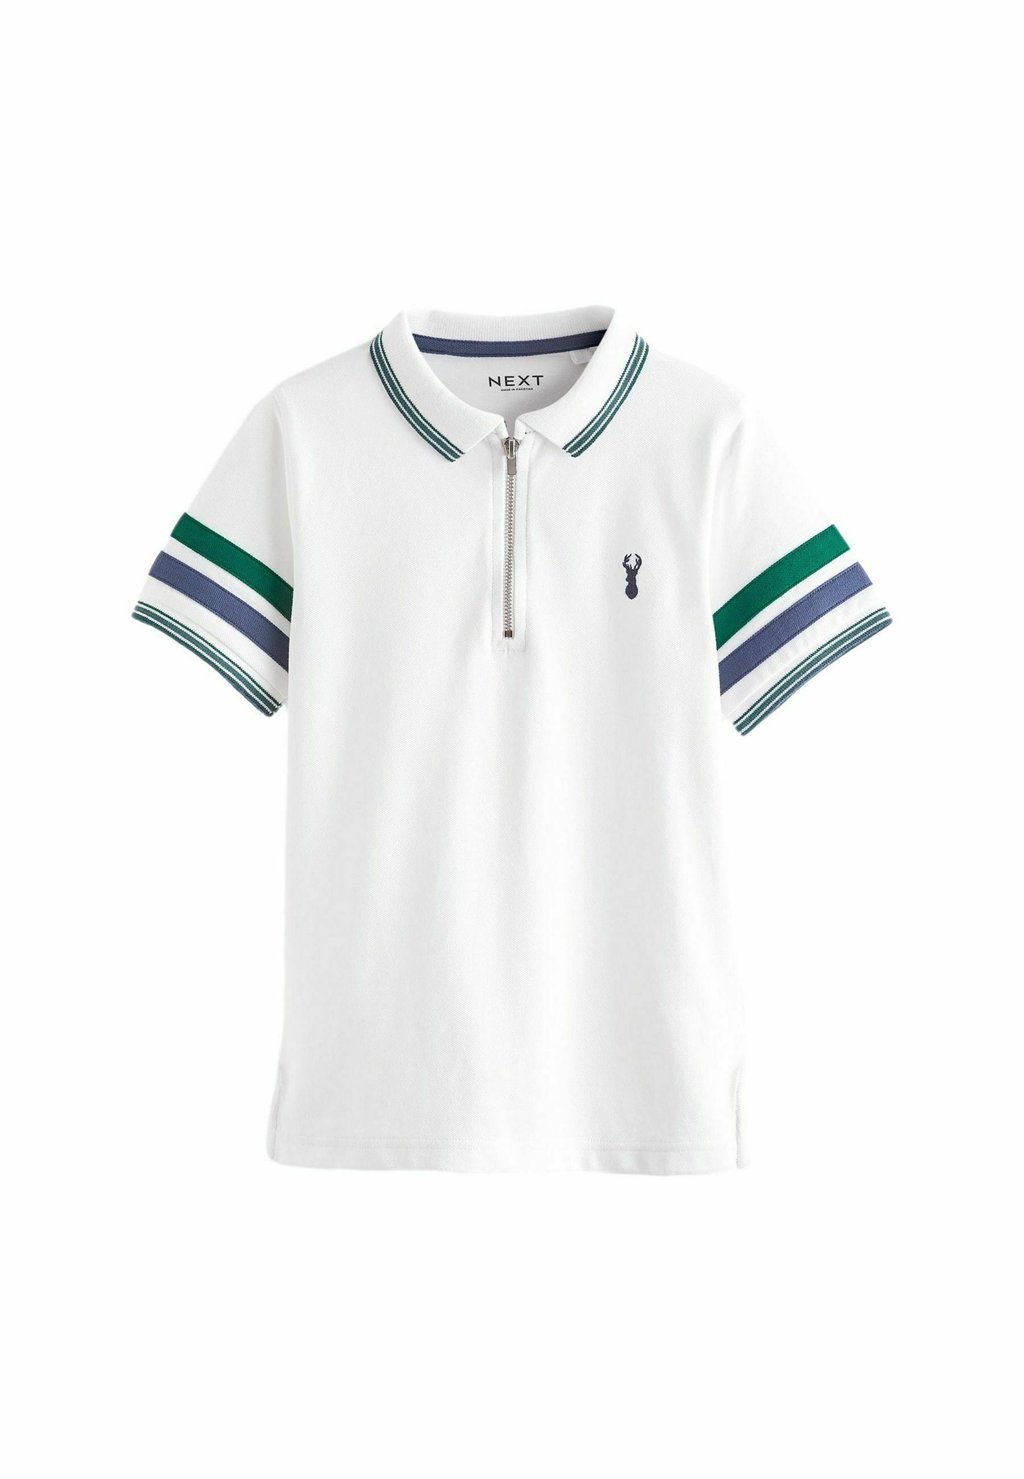 Рубашка поло SHORT SLEEVE REGULAR FIT Next, цвет white green рубашка поло short sleeve regular fit next цвет blue